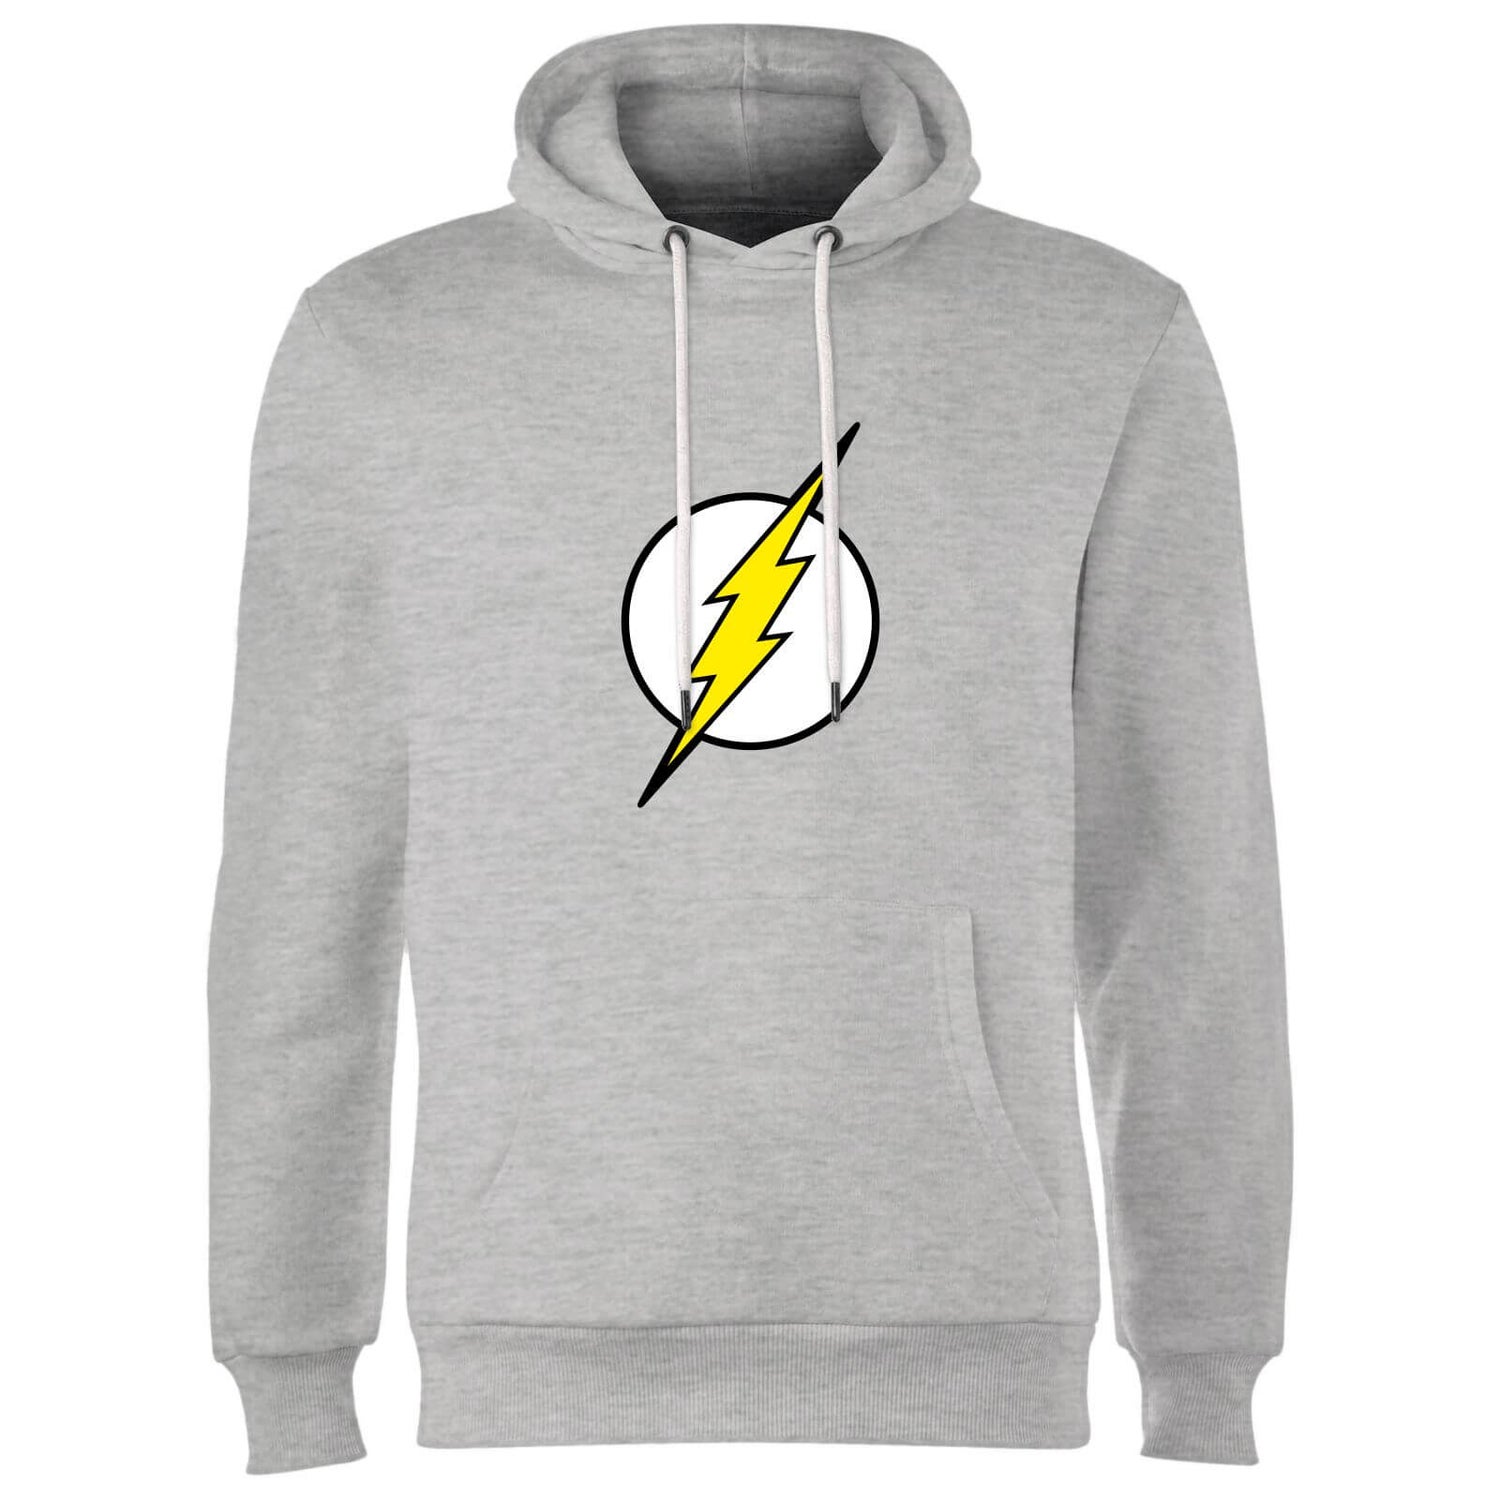 Justice League Flash Logo Hoodie - Grey